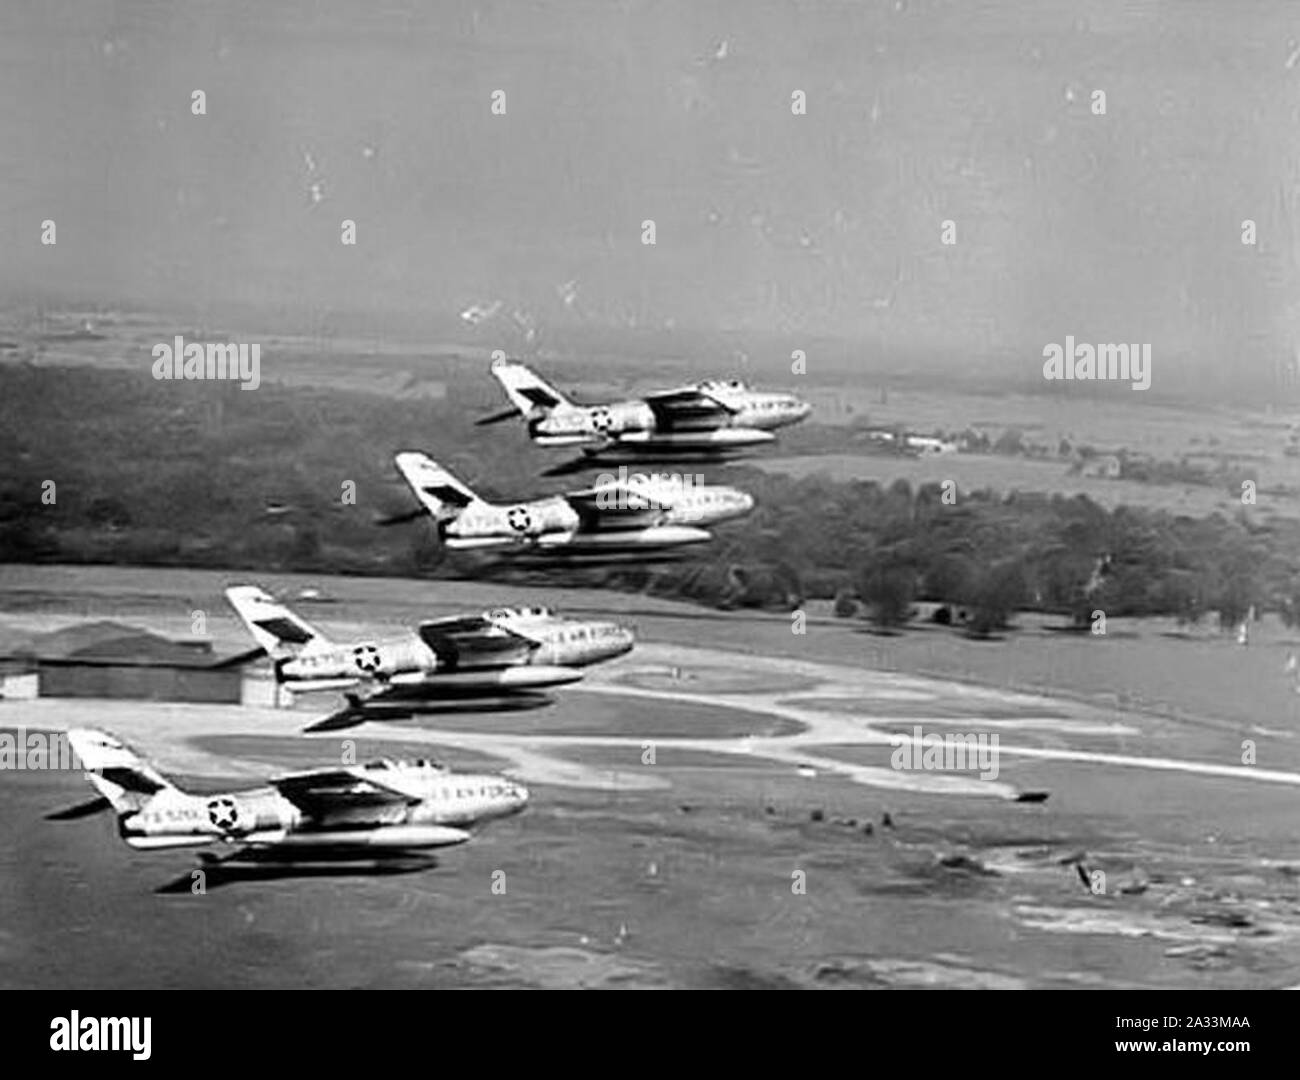 F-84f-7108tw-chm-1962. Stock Photo